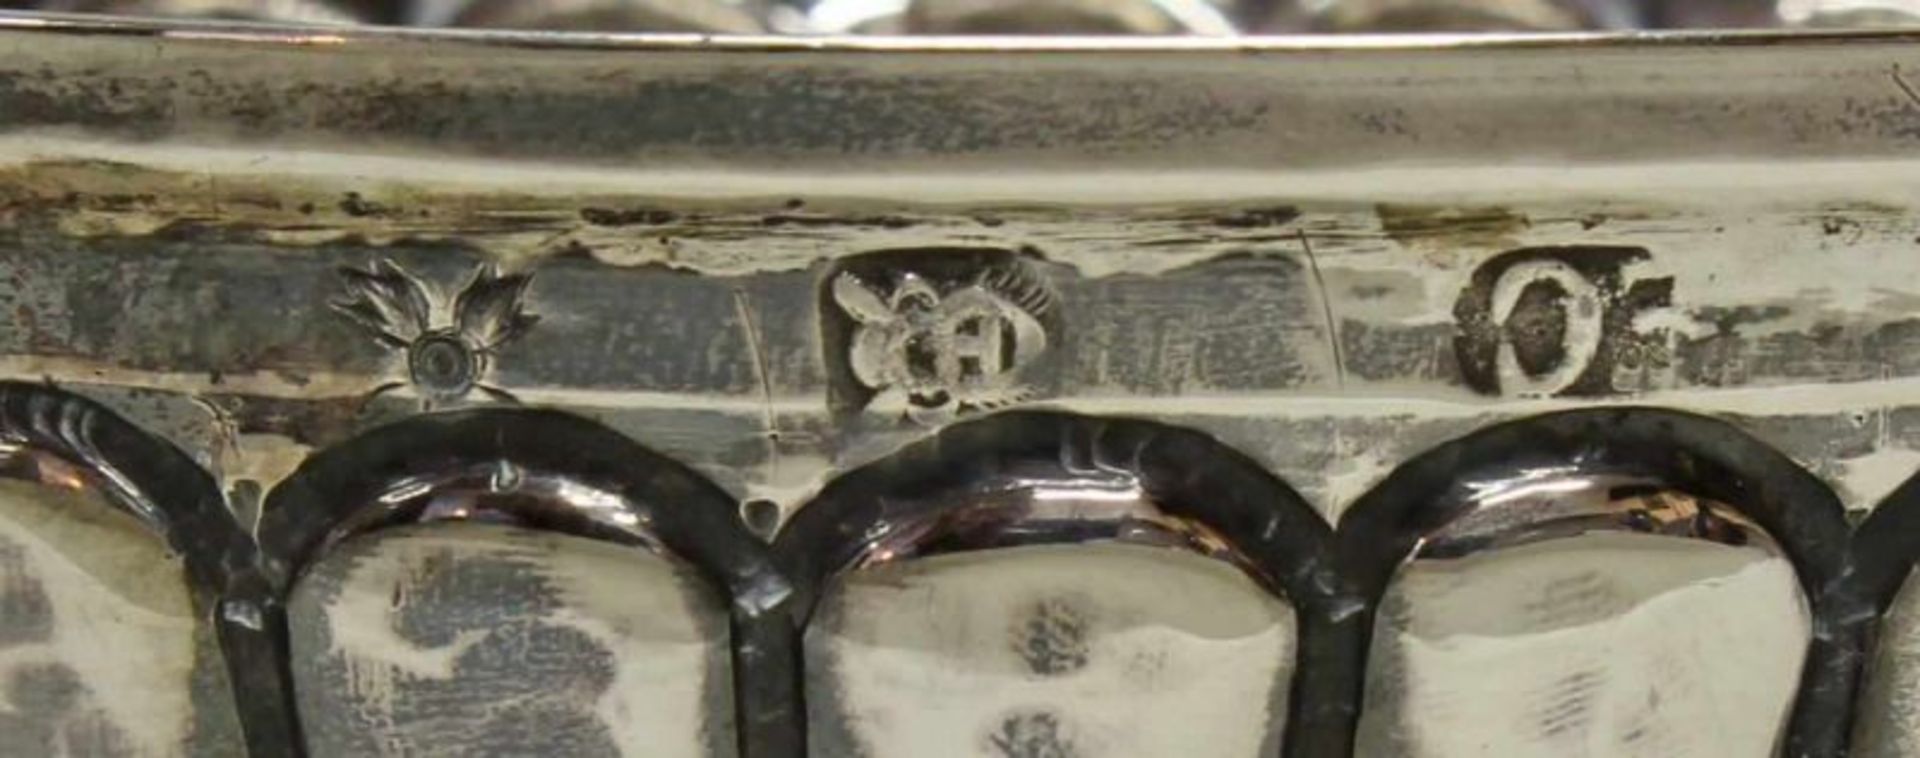 Branntweinschale, Silber, Stadtmarke Zwolle, Beschaumarke Kopf, passig-oval, Rankendekor, zwei - Bild 3 aus 6